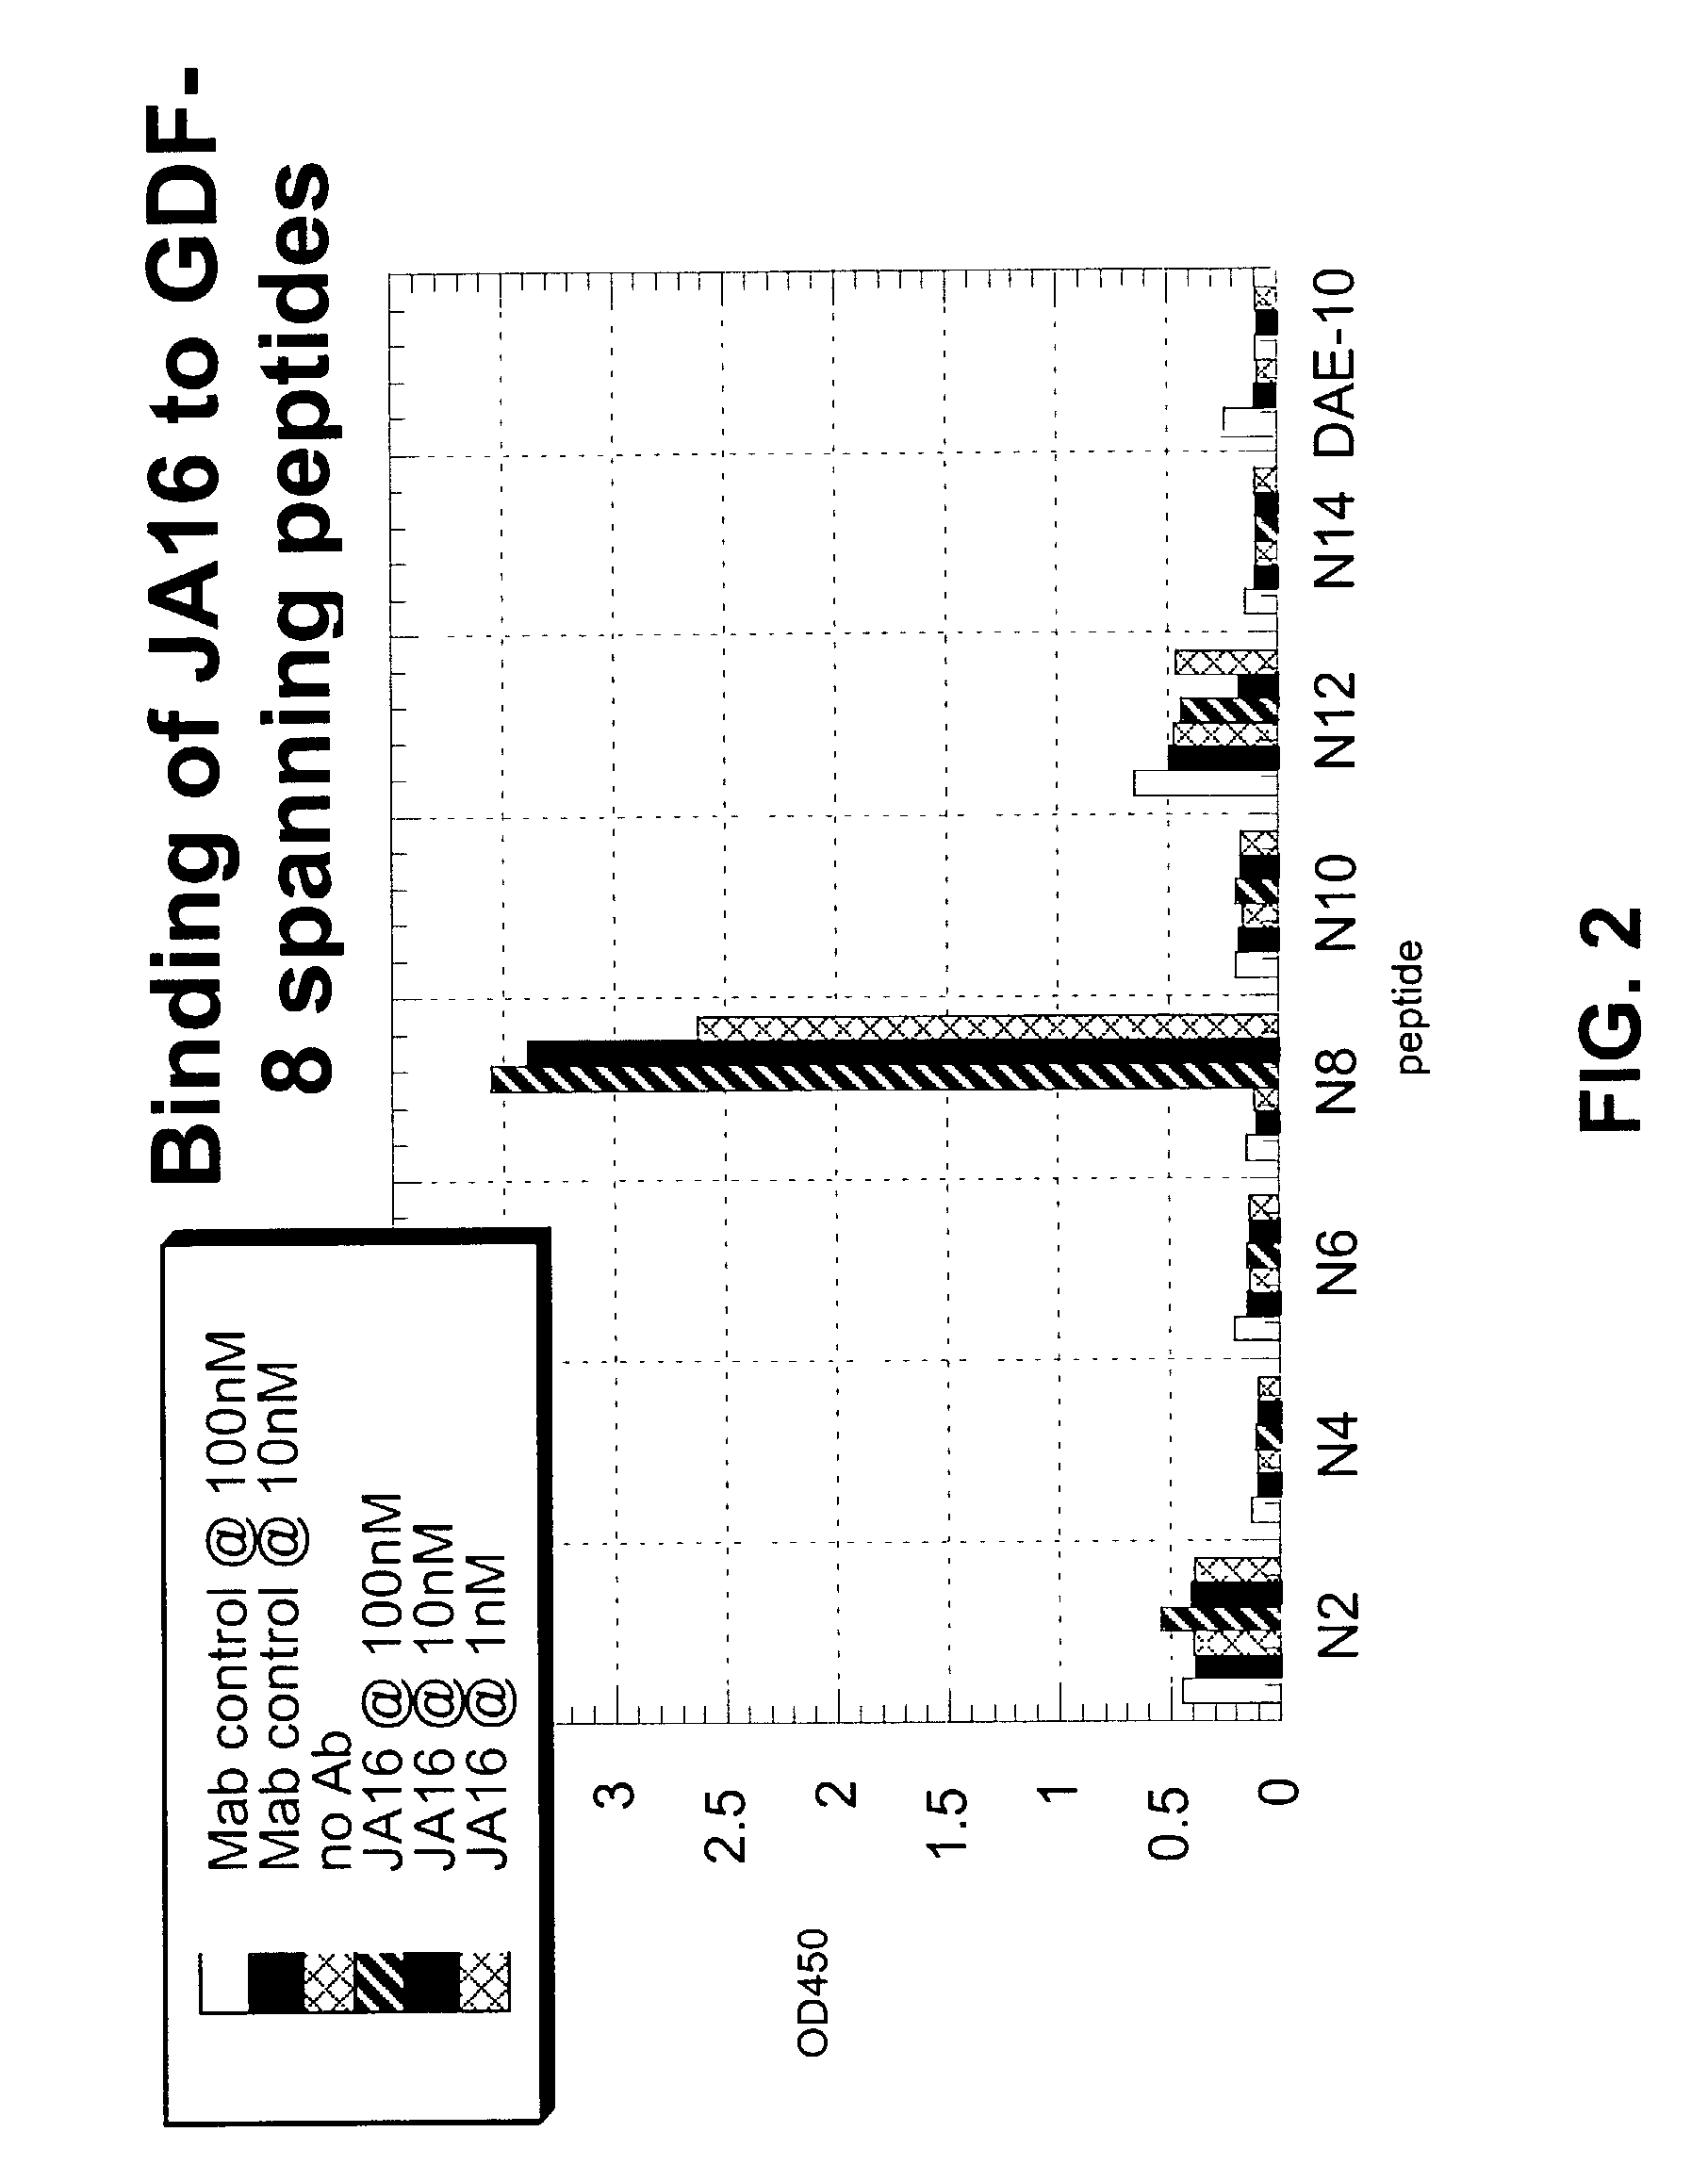 Antibody inhibitors of GDF-8 and uses thereof